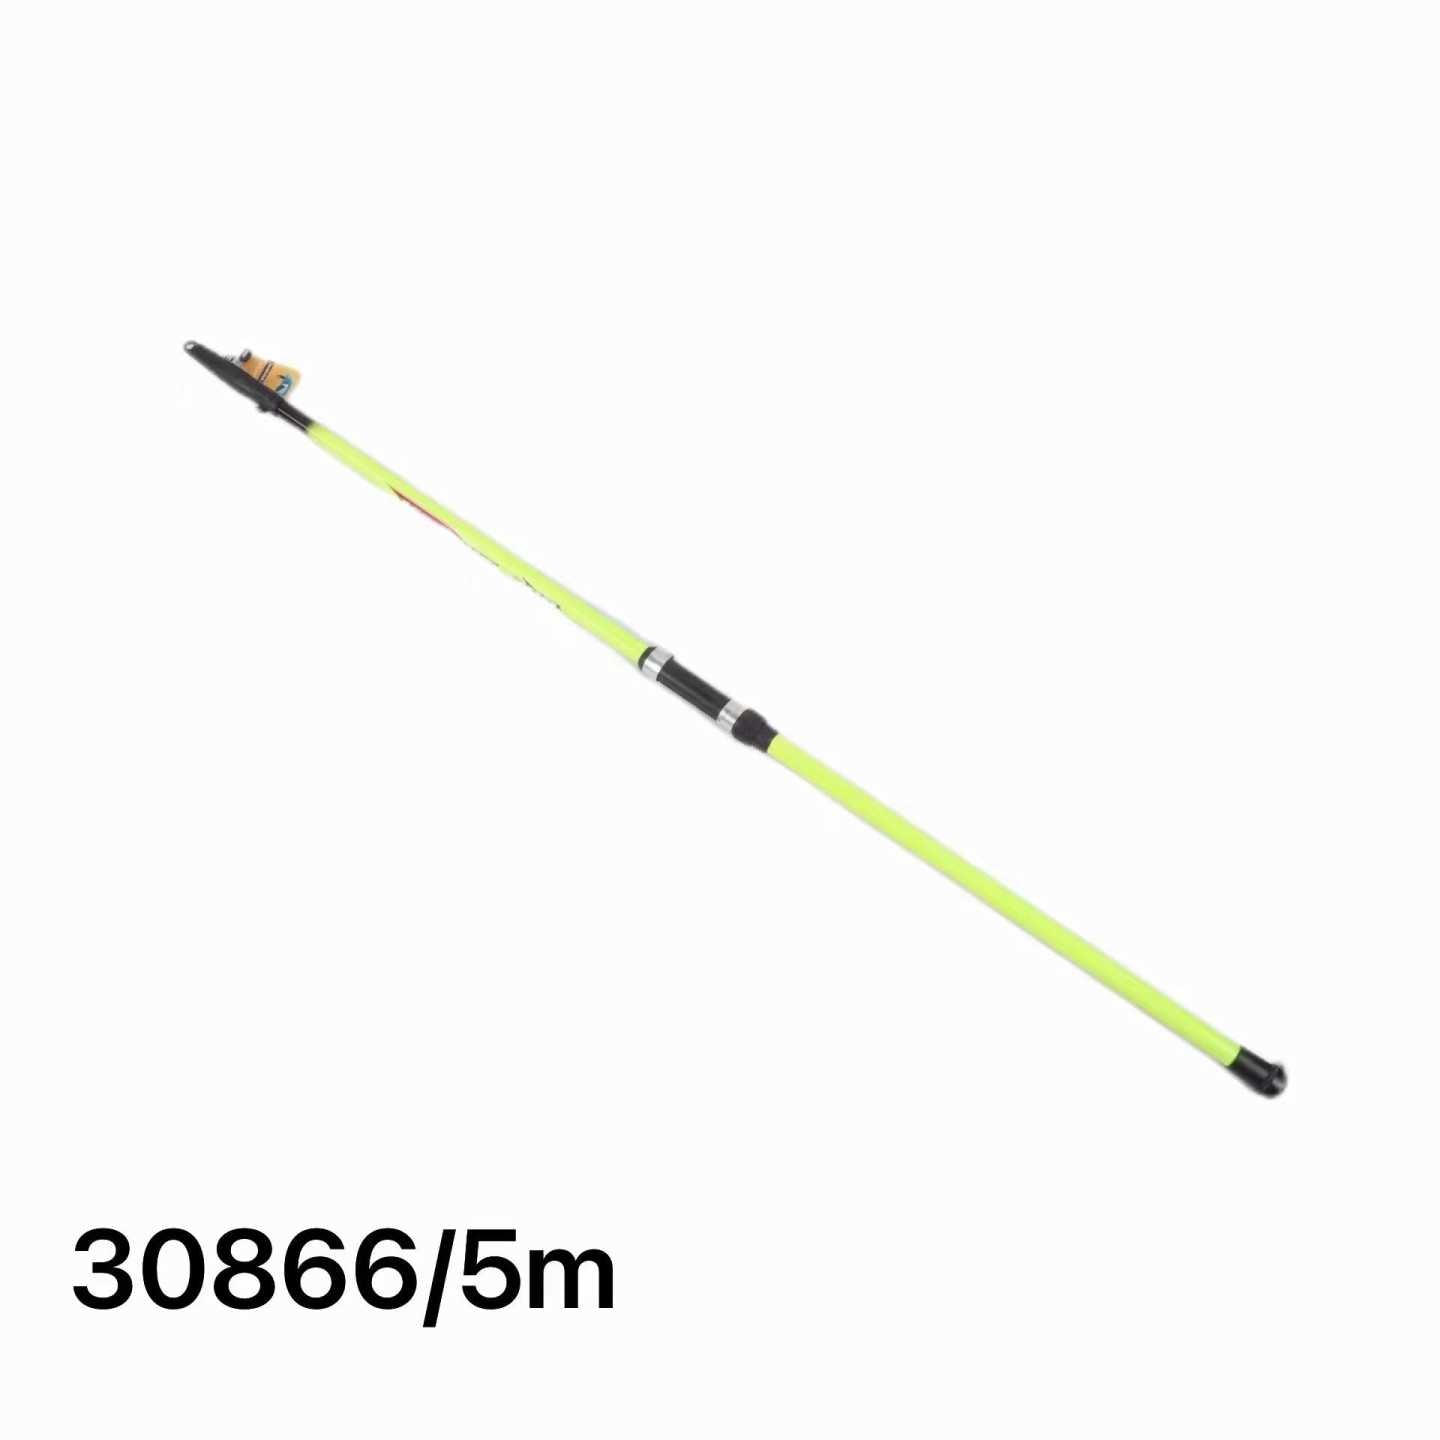 Telescopic fishing rod - 5m - 30866